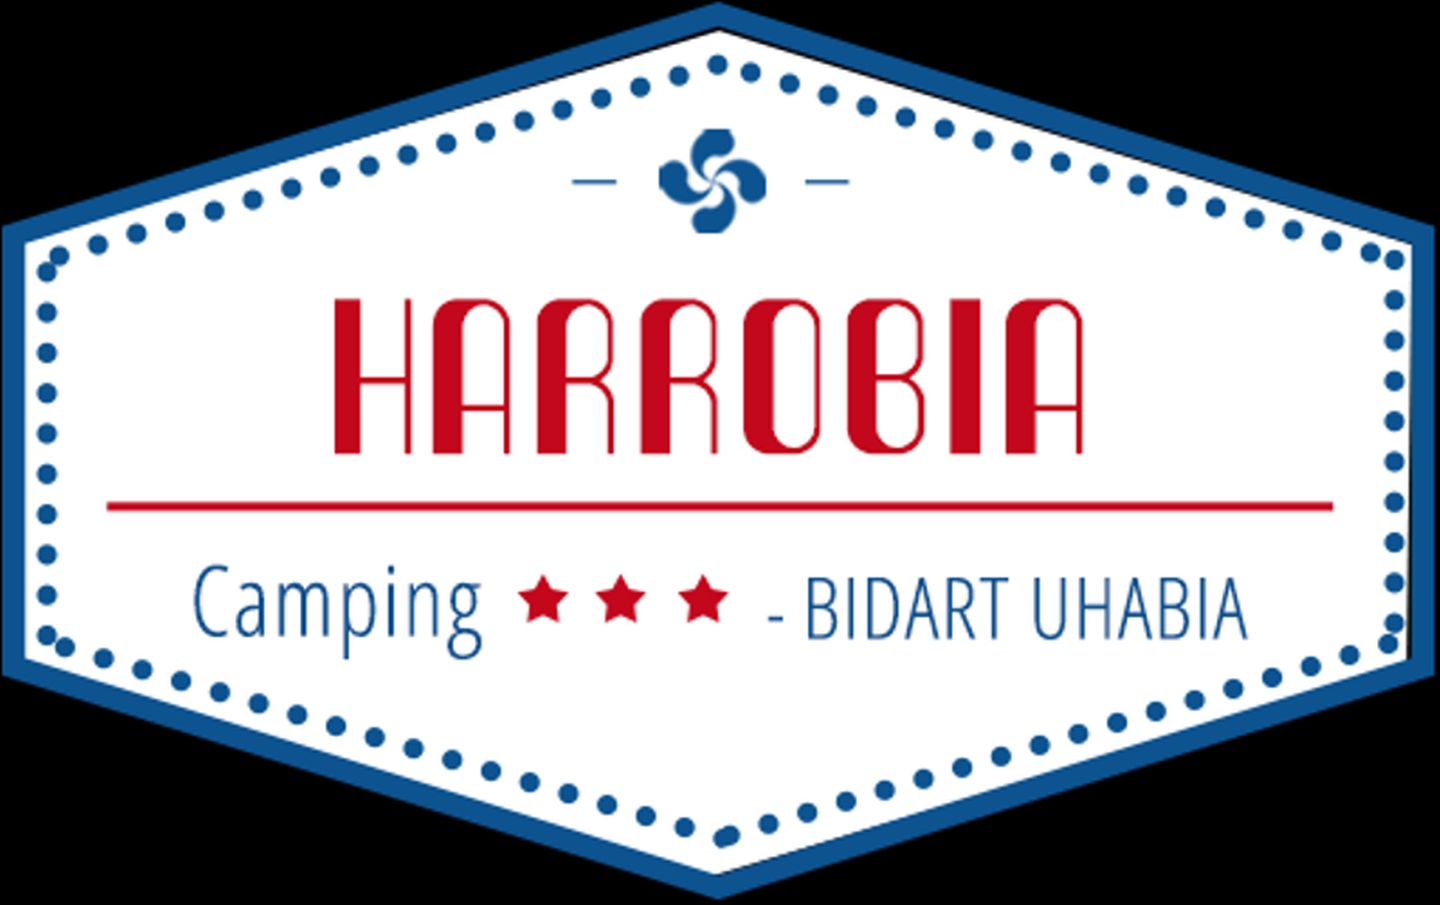 Camping Harrobia